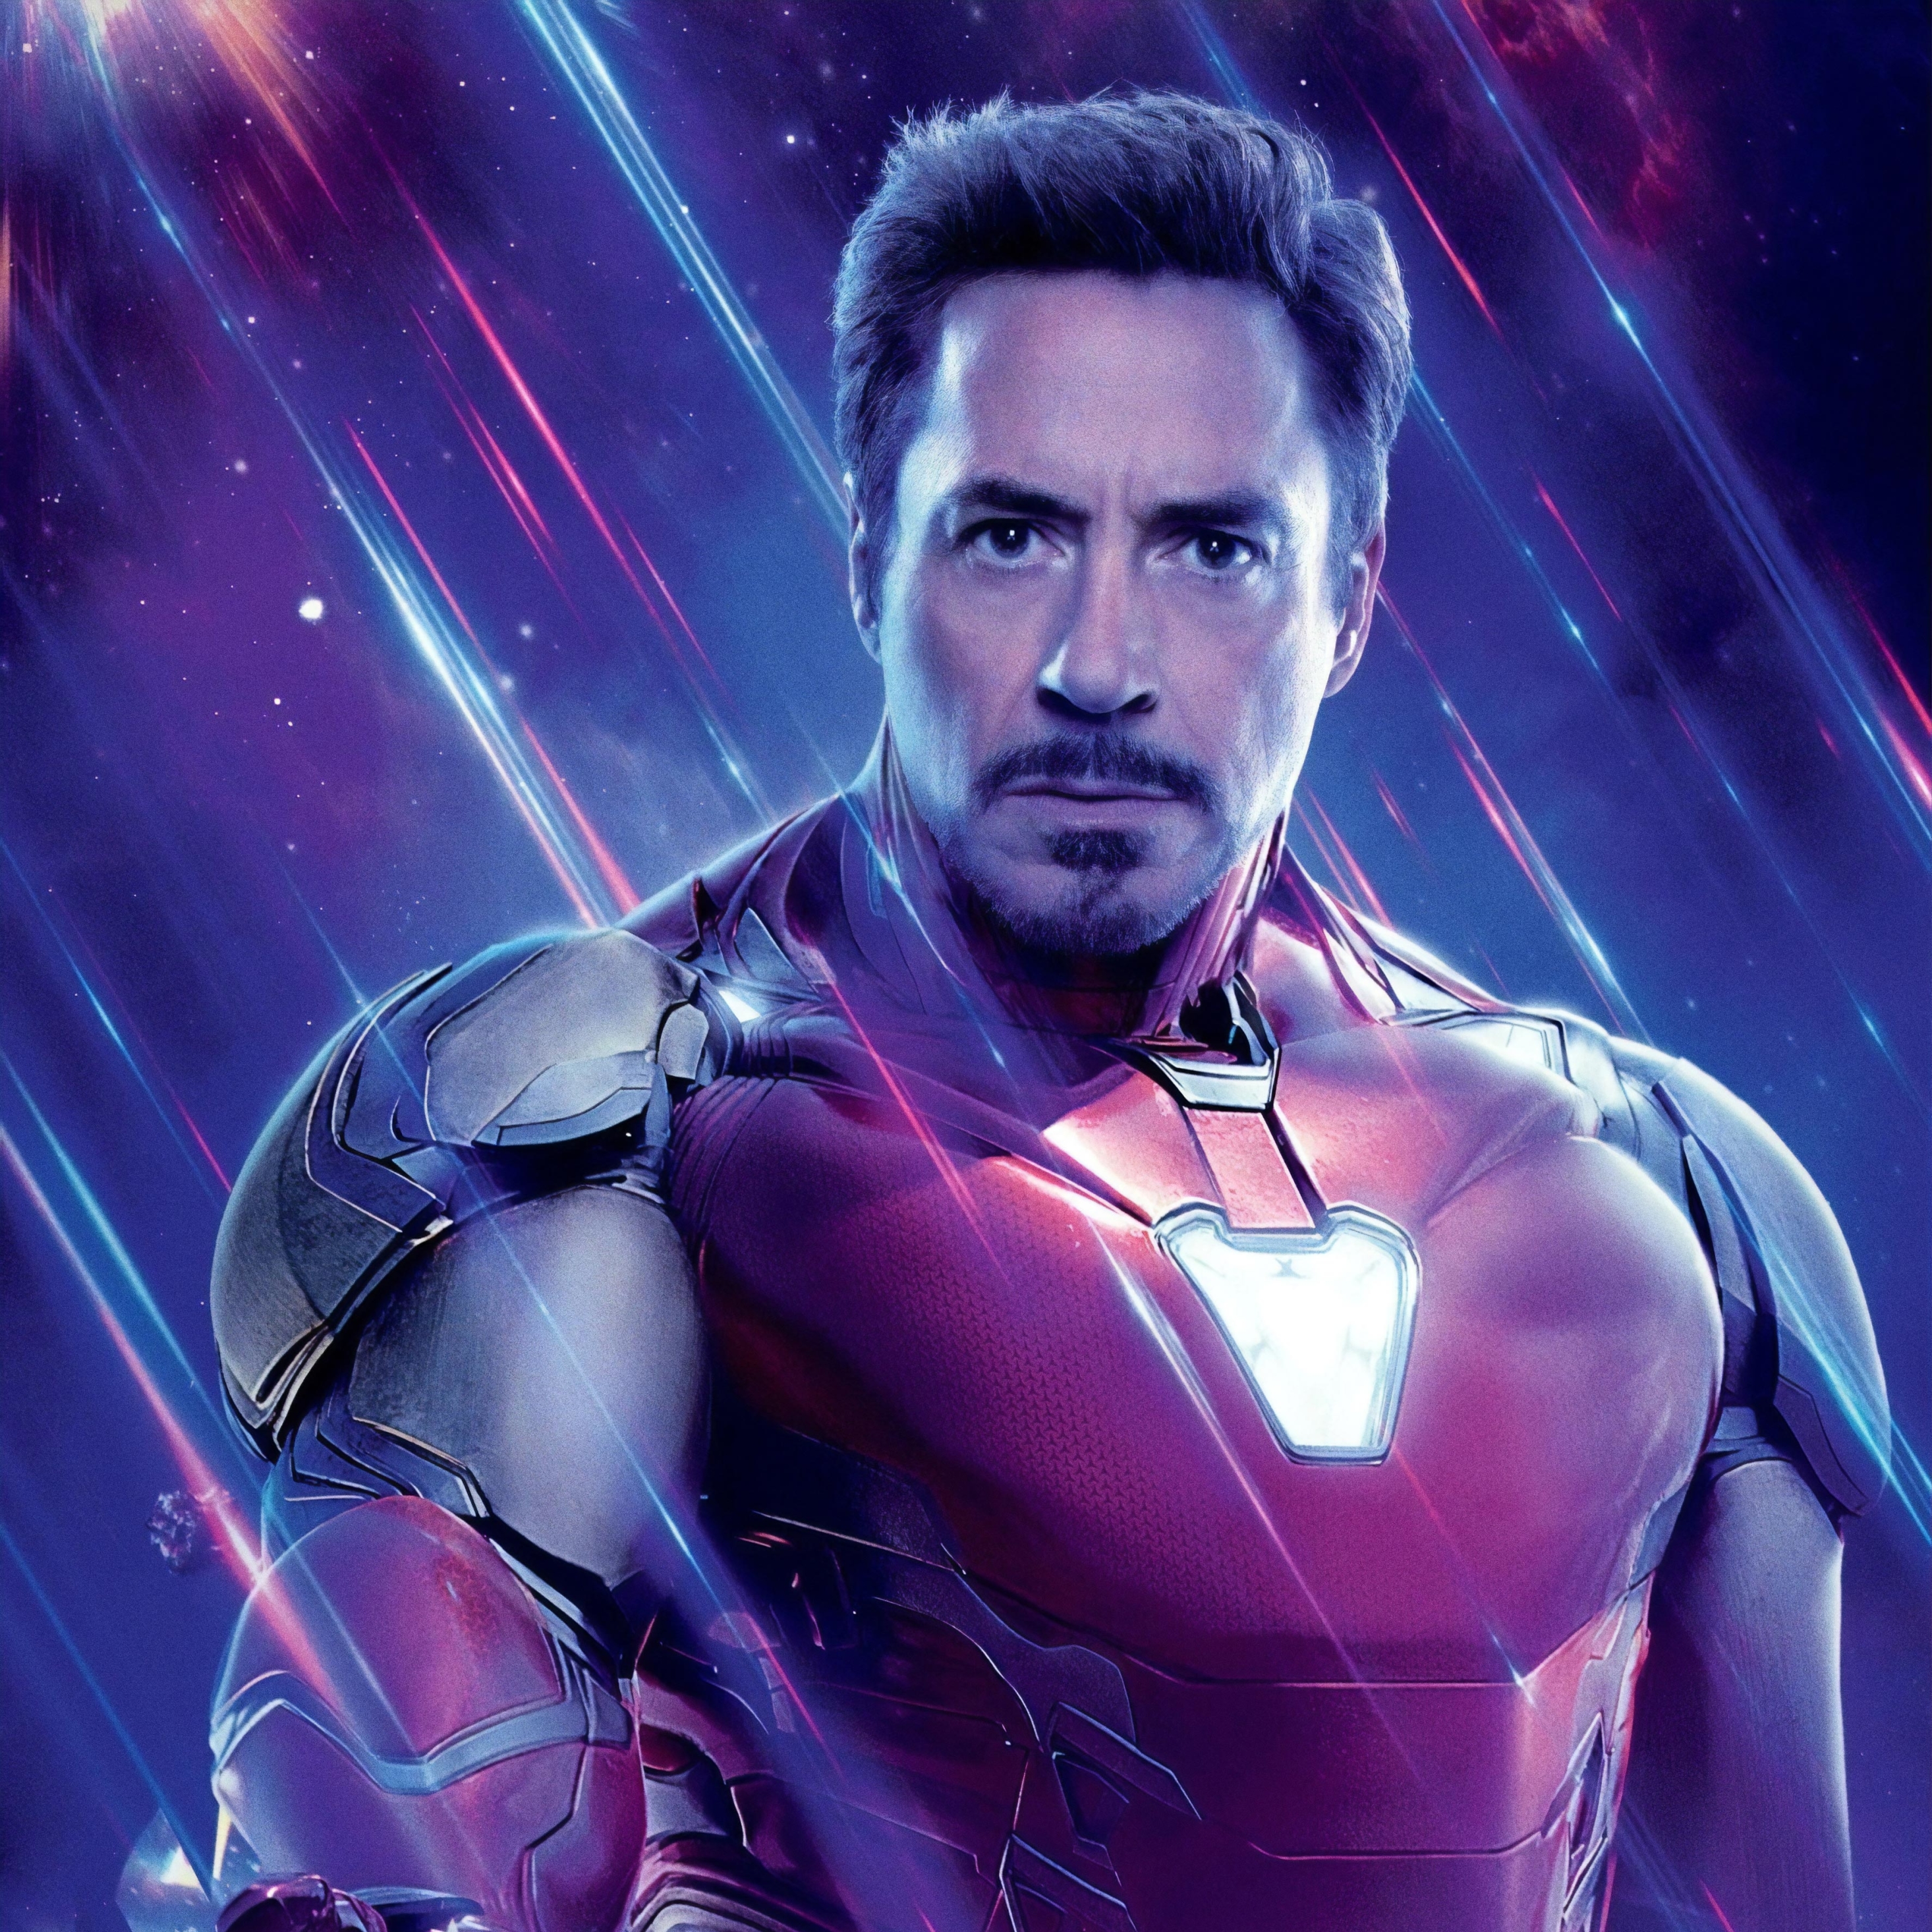 Iron Man Avengers Endgame - 2932x2932 Wallpaper 